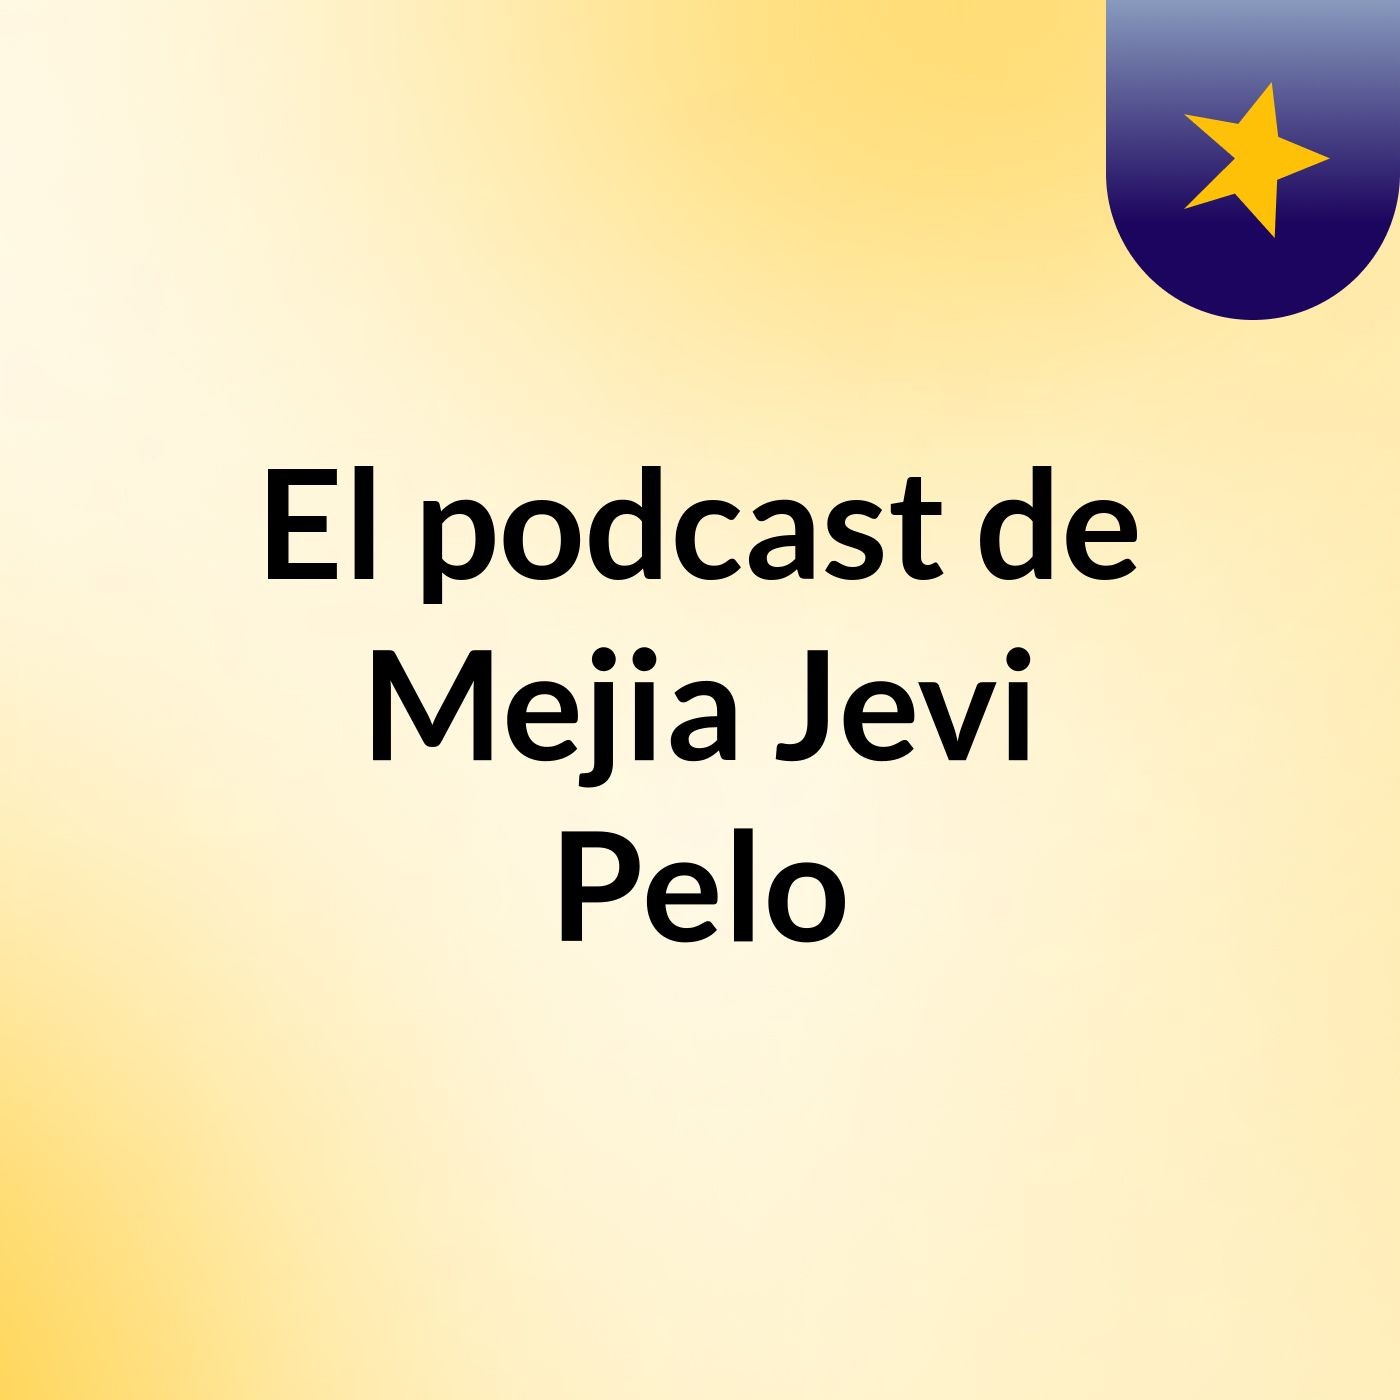 El podcast de Mejia Jevi Pelo